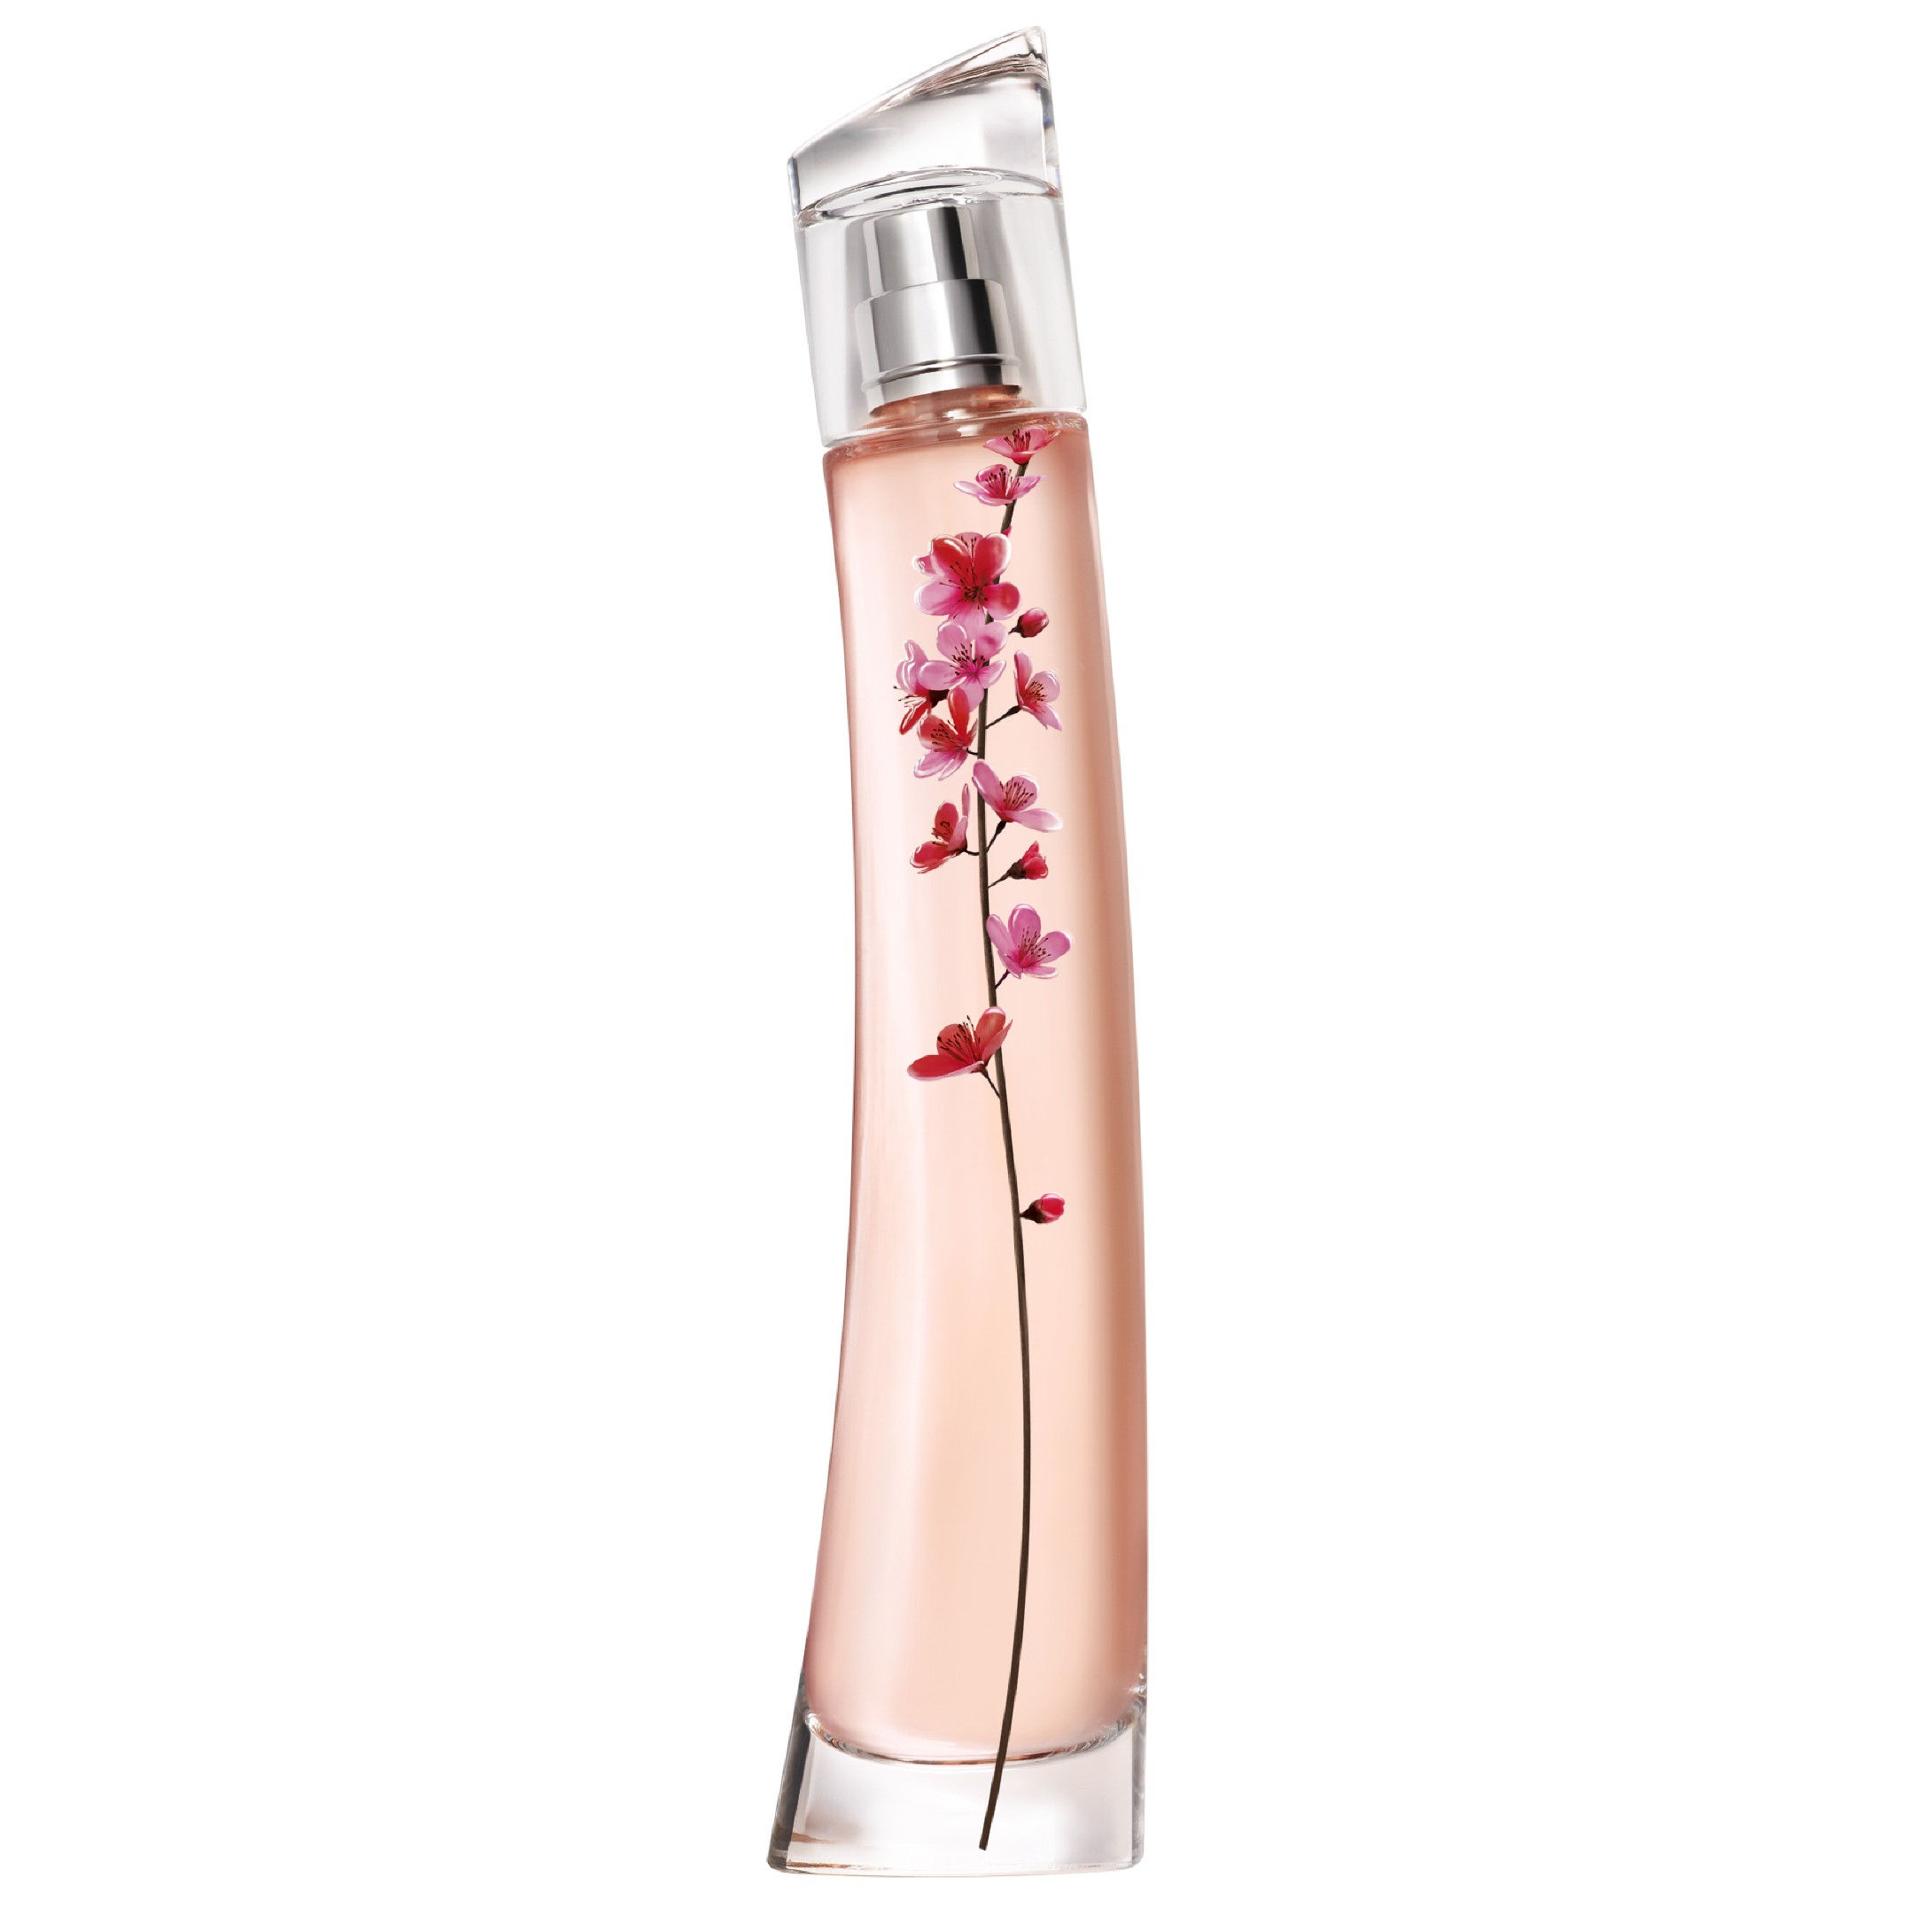 Kenzo Flower by Kenzo Ikebana Eau de parfum spray 75 ml